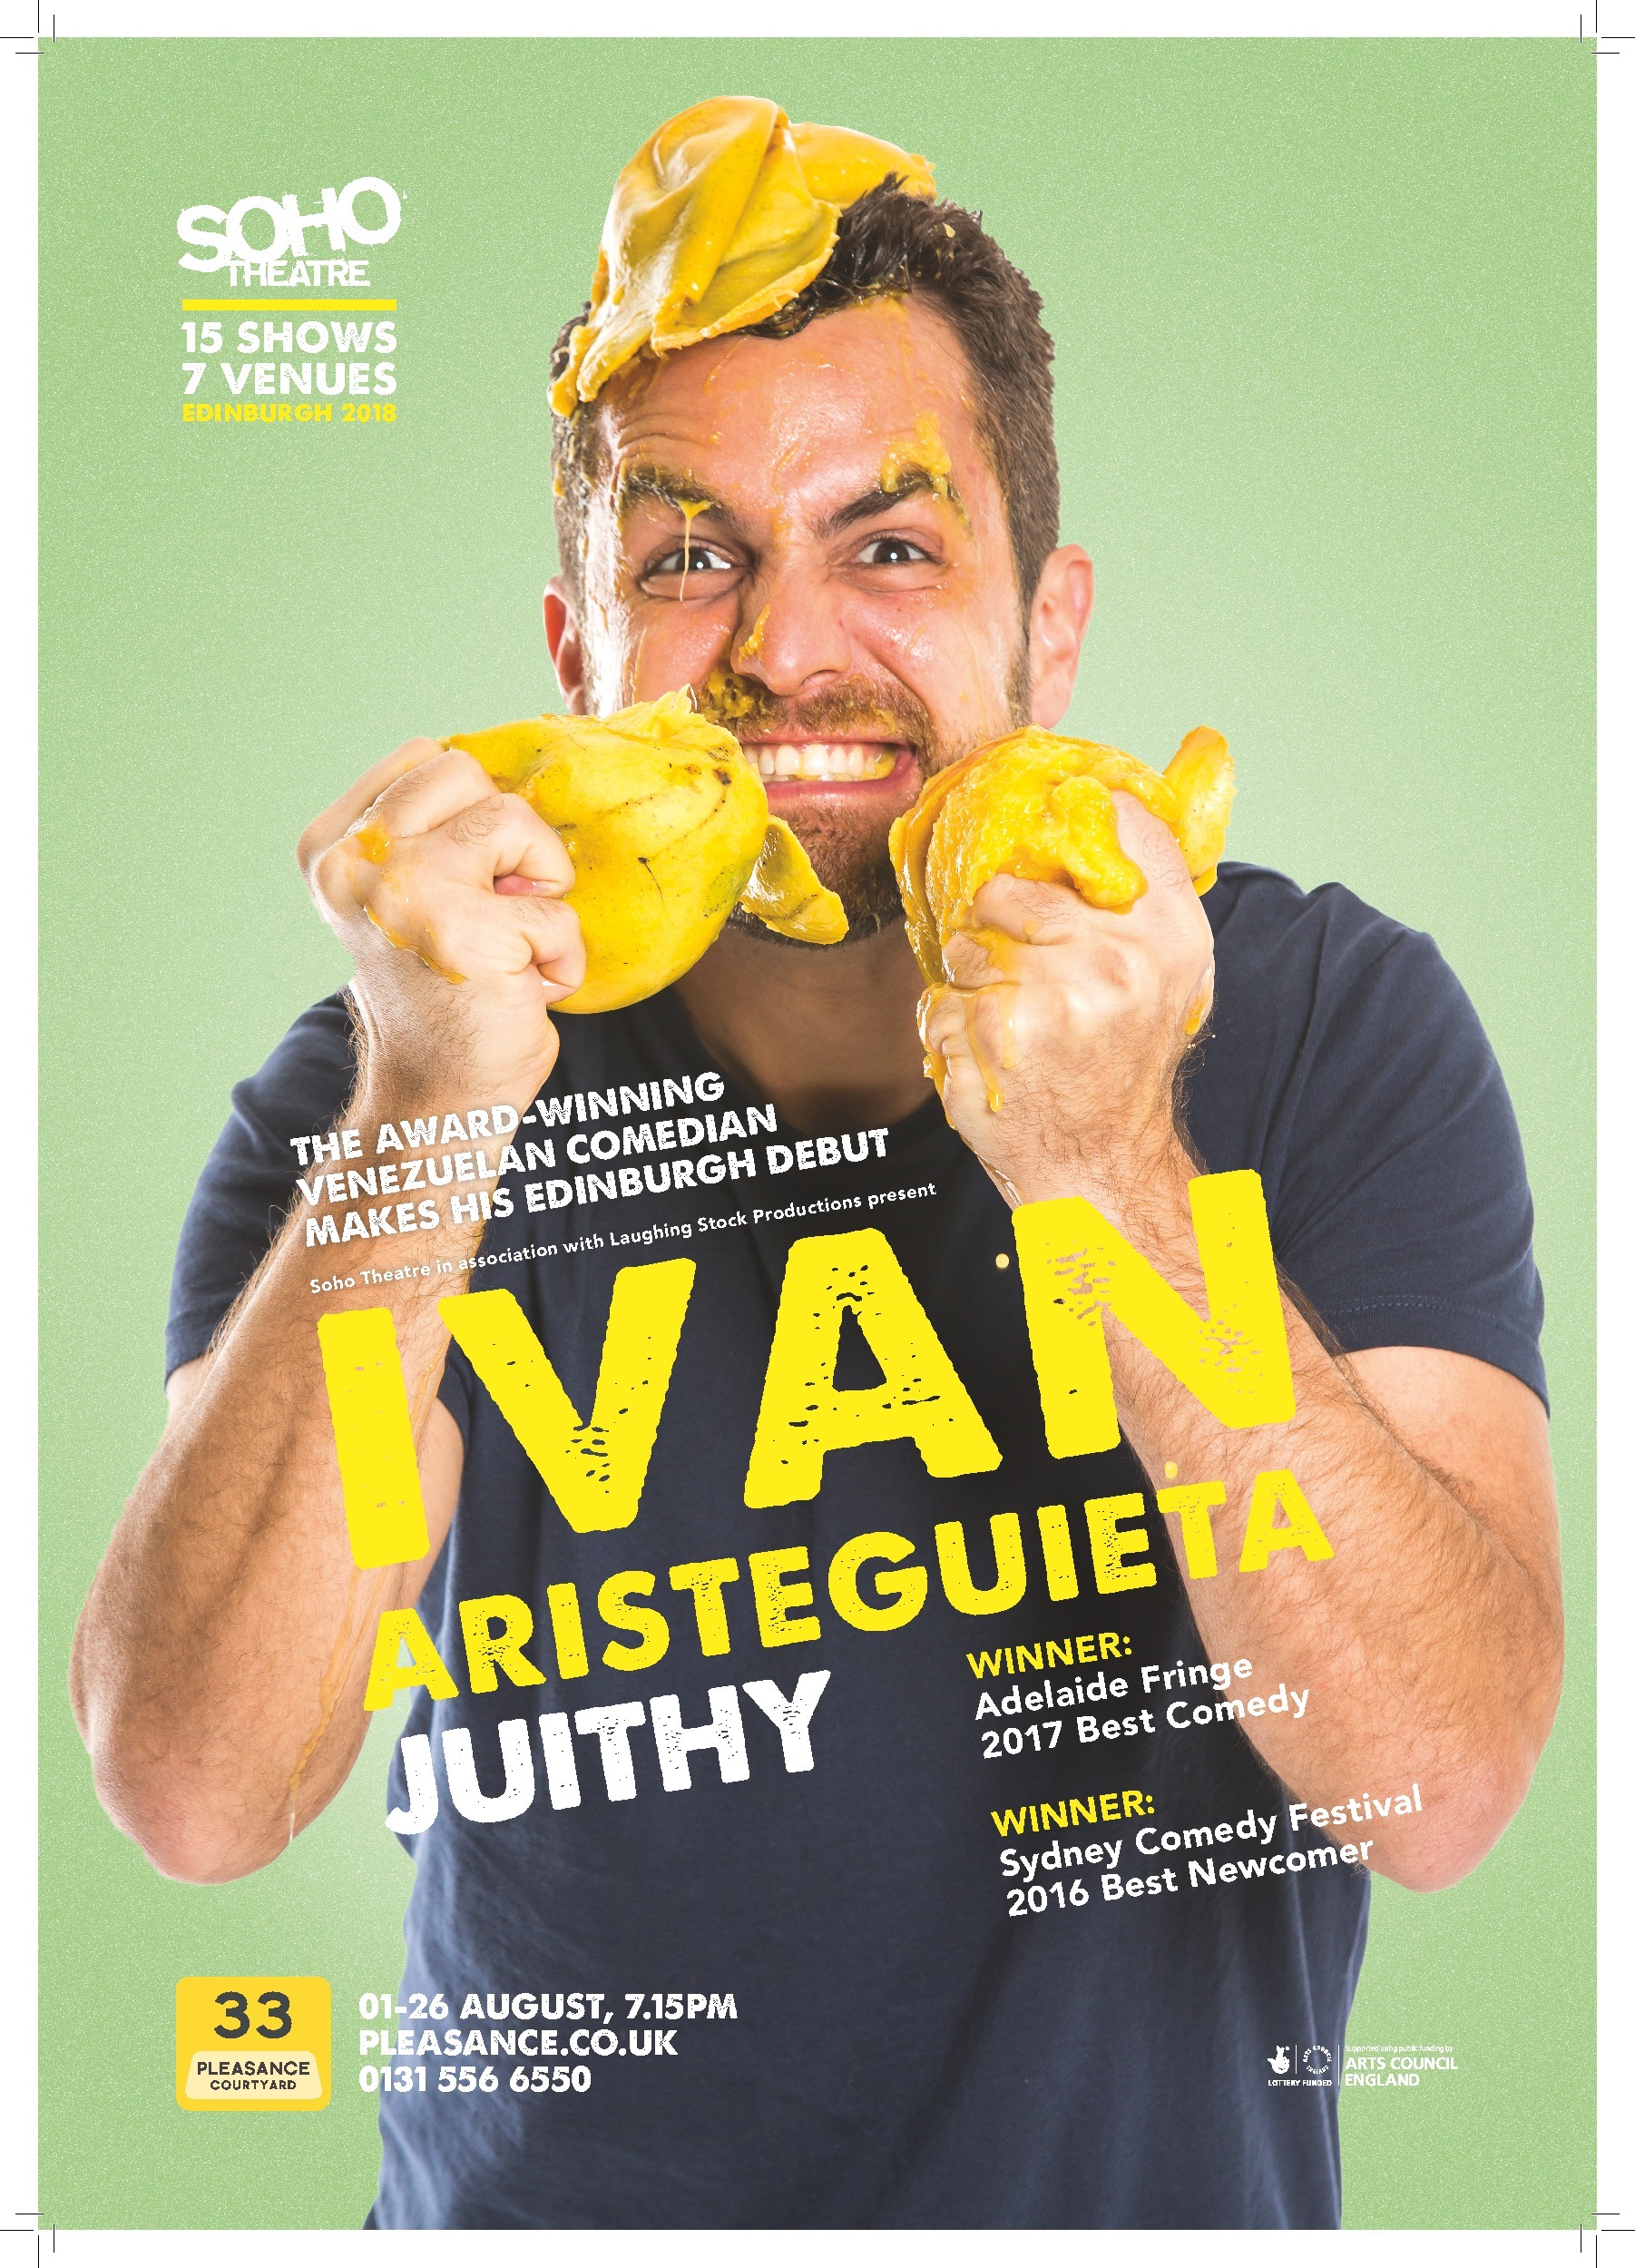 The poster for Ivan Aristeguieta: Juithy